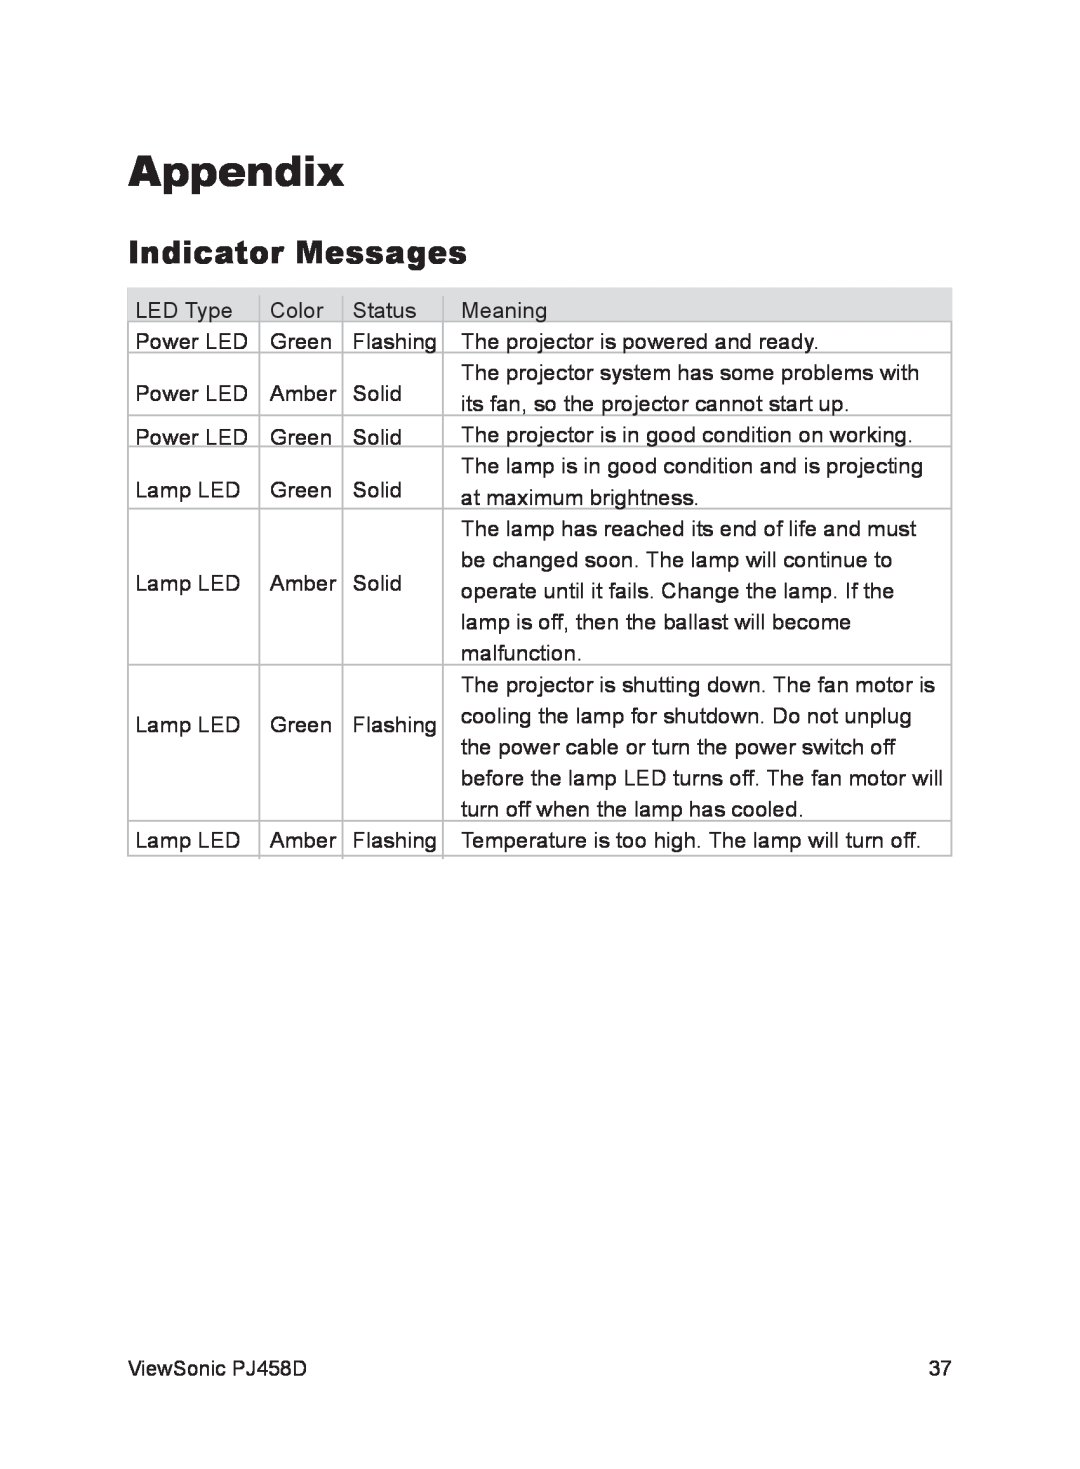 ViewSonic PJ458D manual Appendix, Indicator Messages 